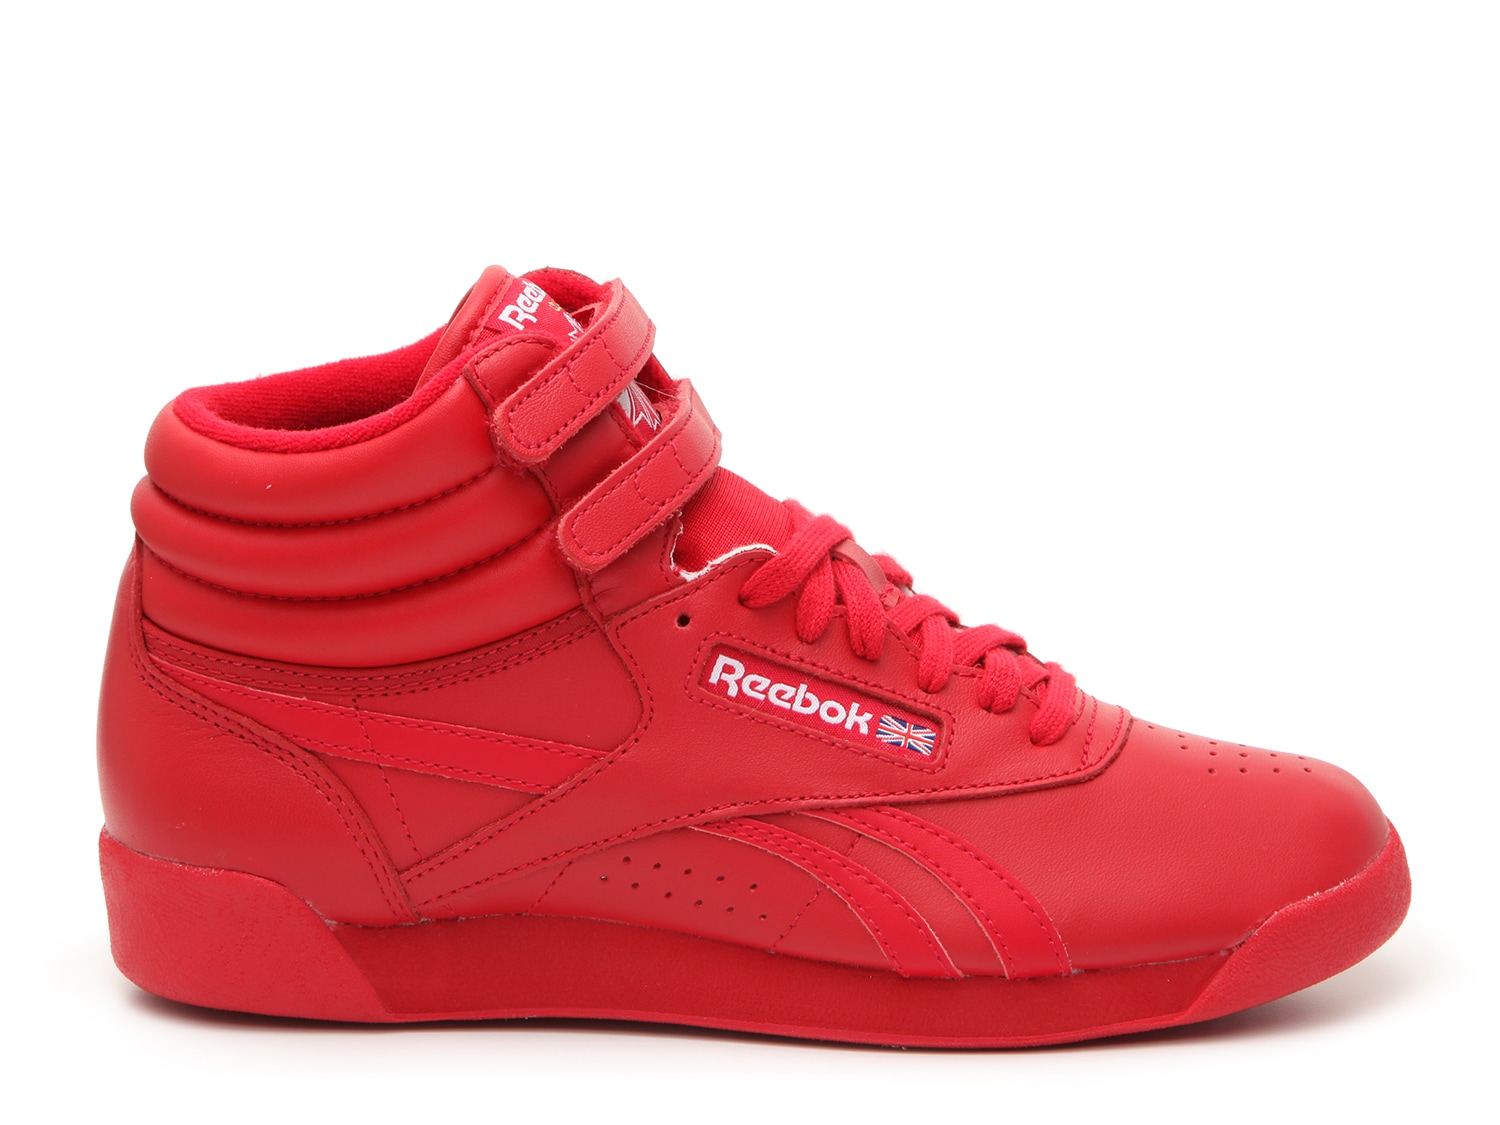 reebok womens high top tennis shoes